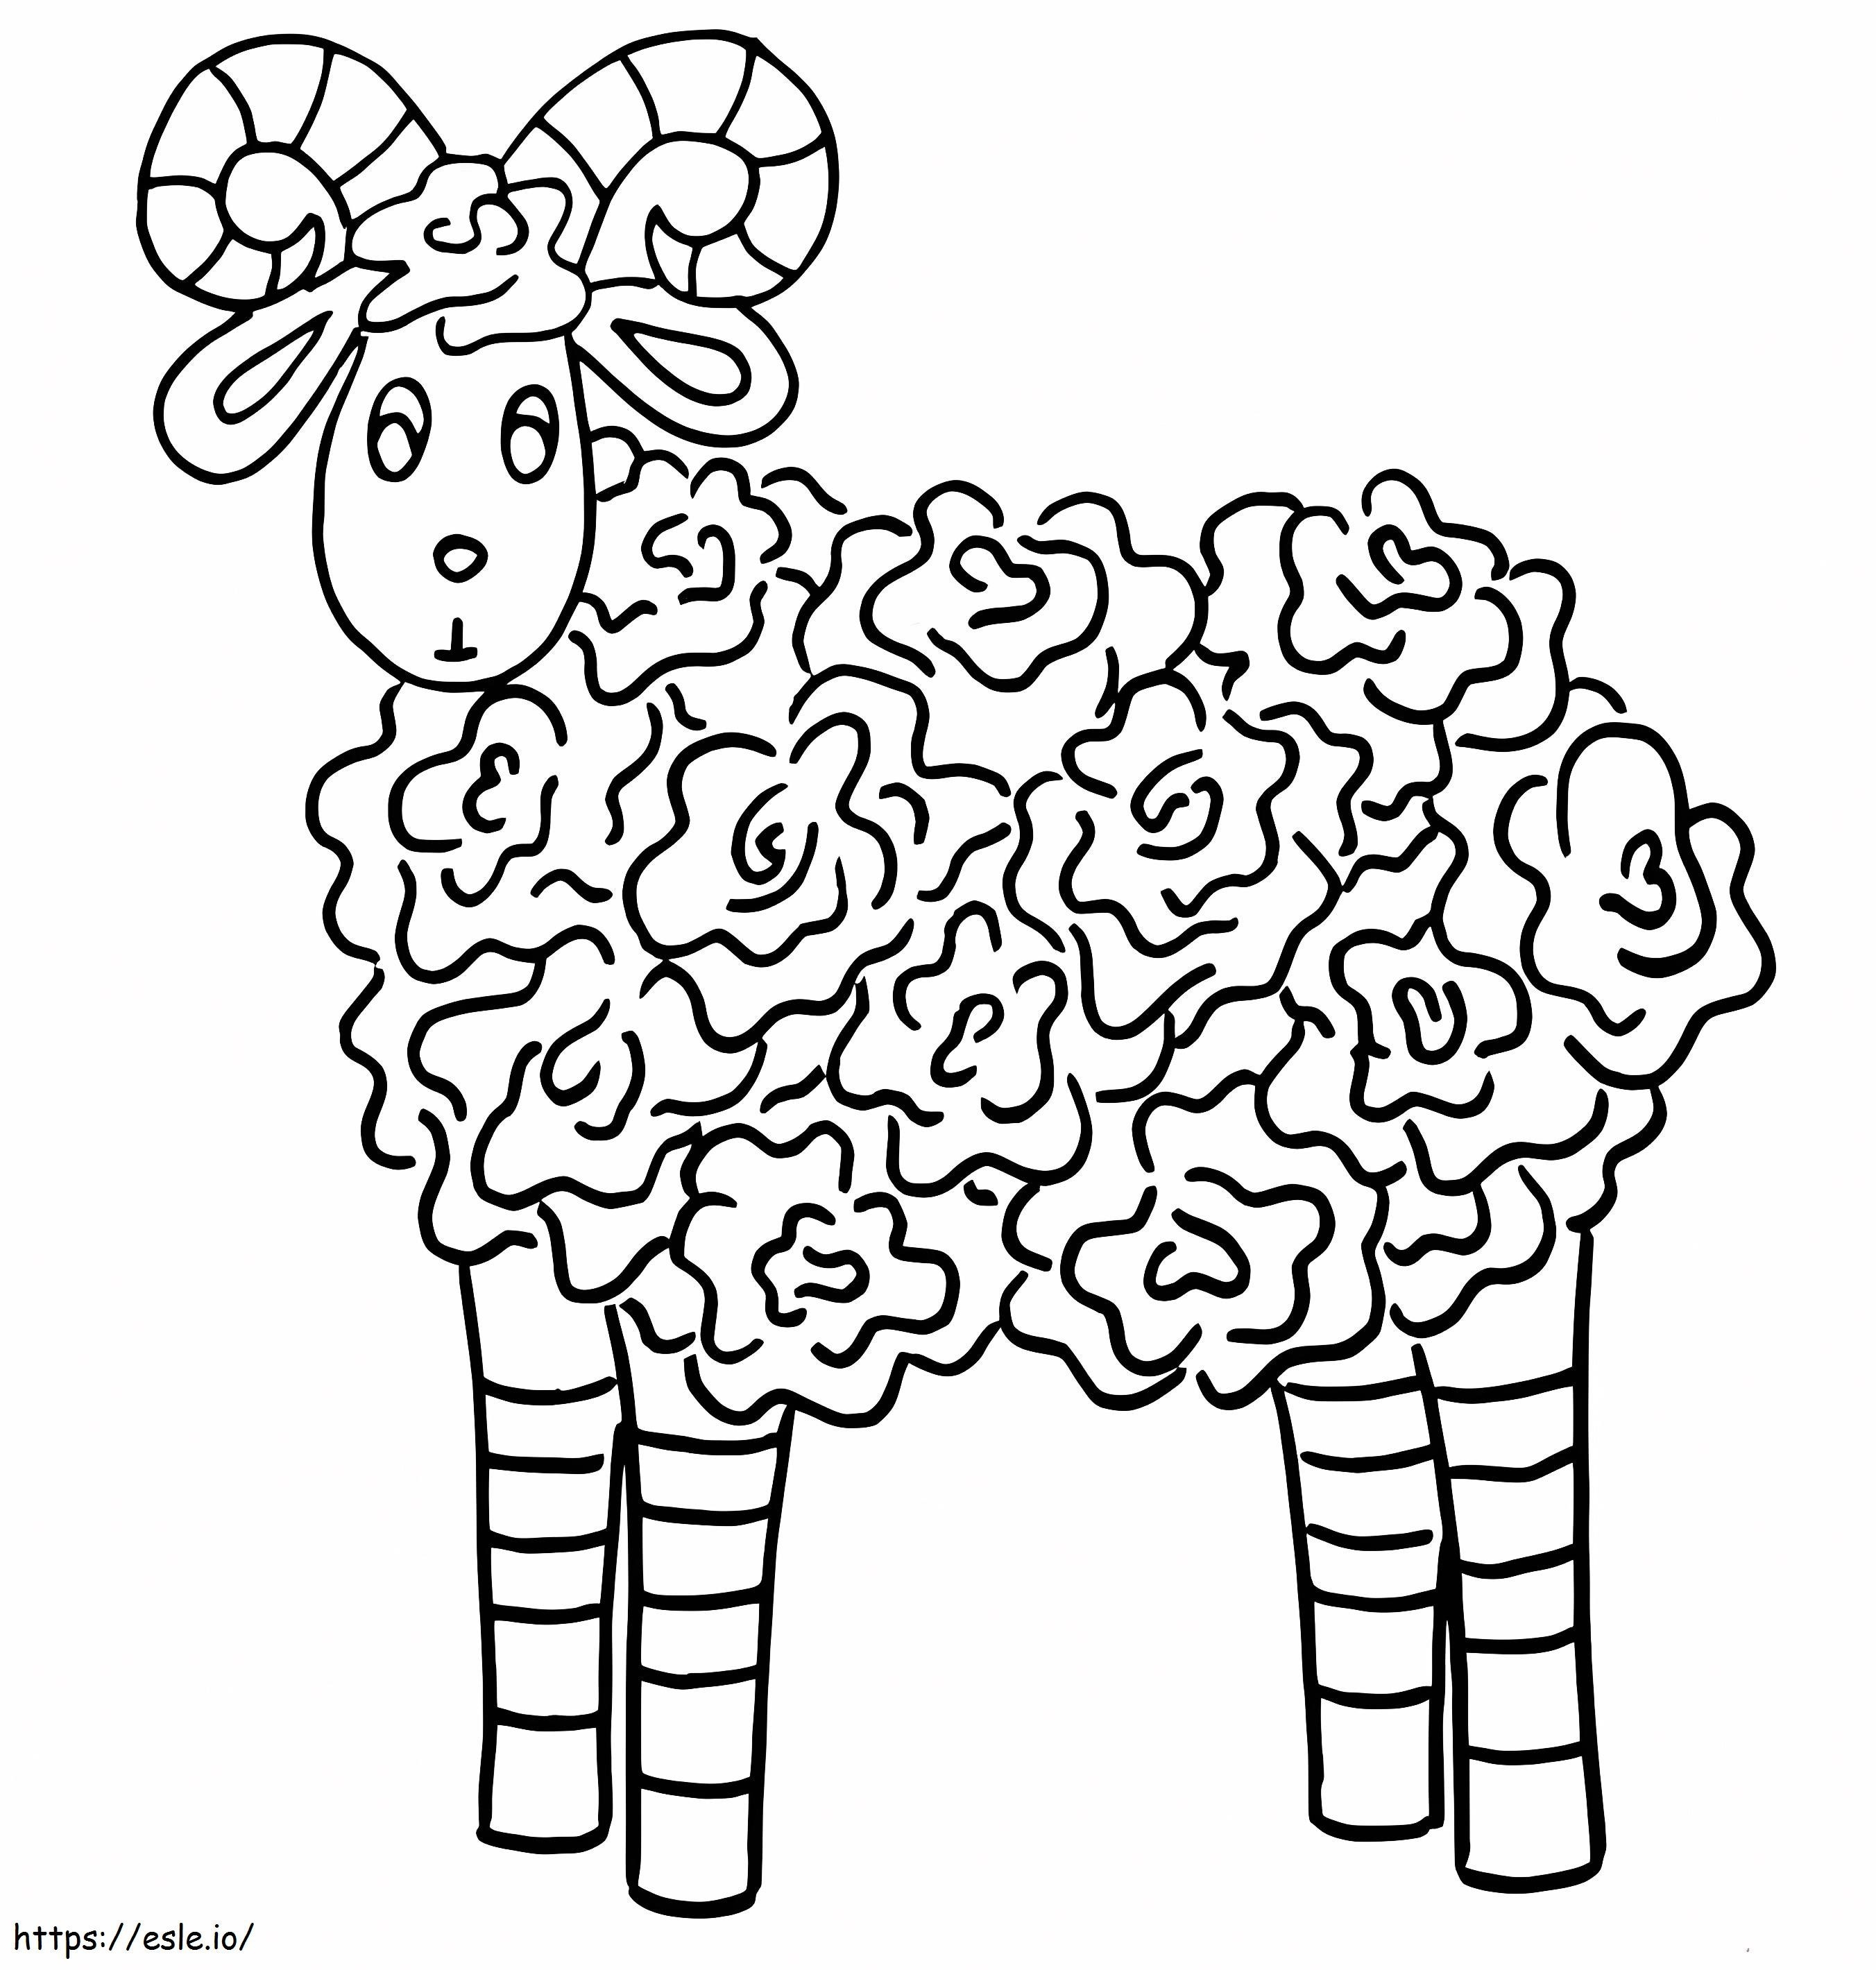 Rose Sheep Alebrije coloring page